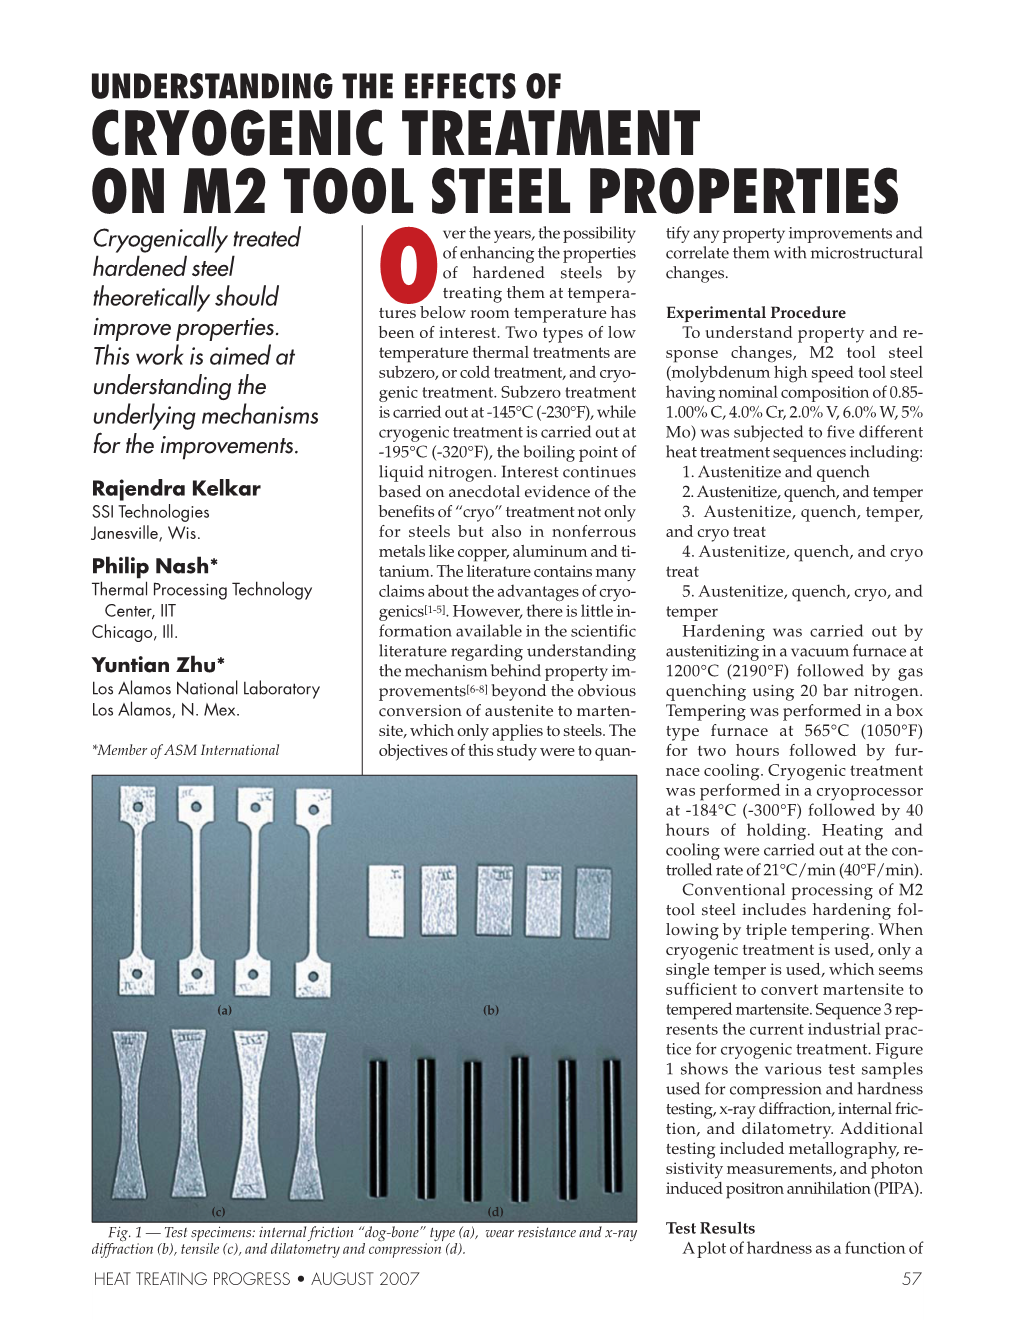 Cryogenic Treatment on M2 Tool Steel Properties